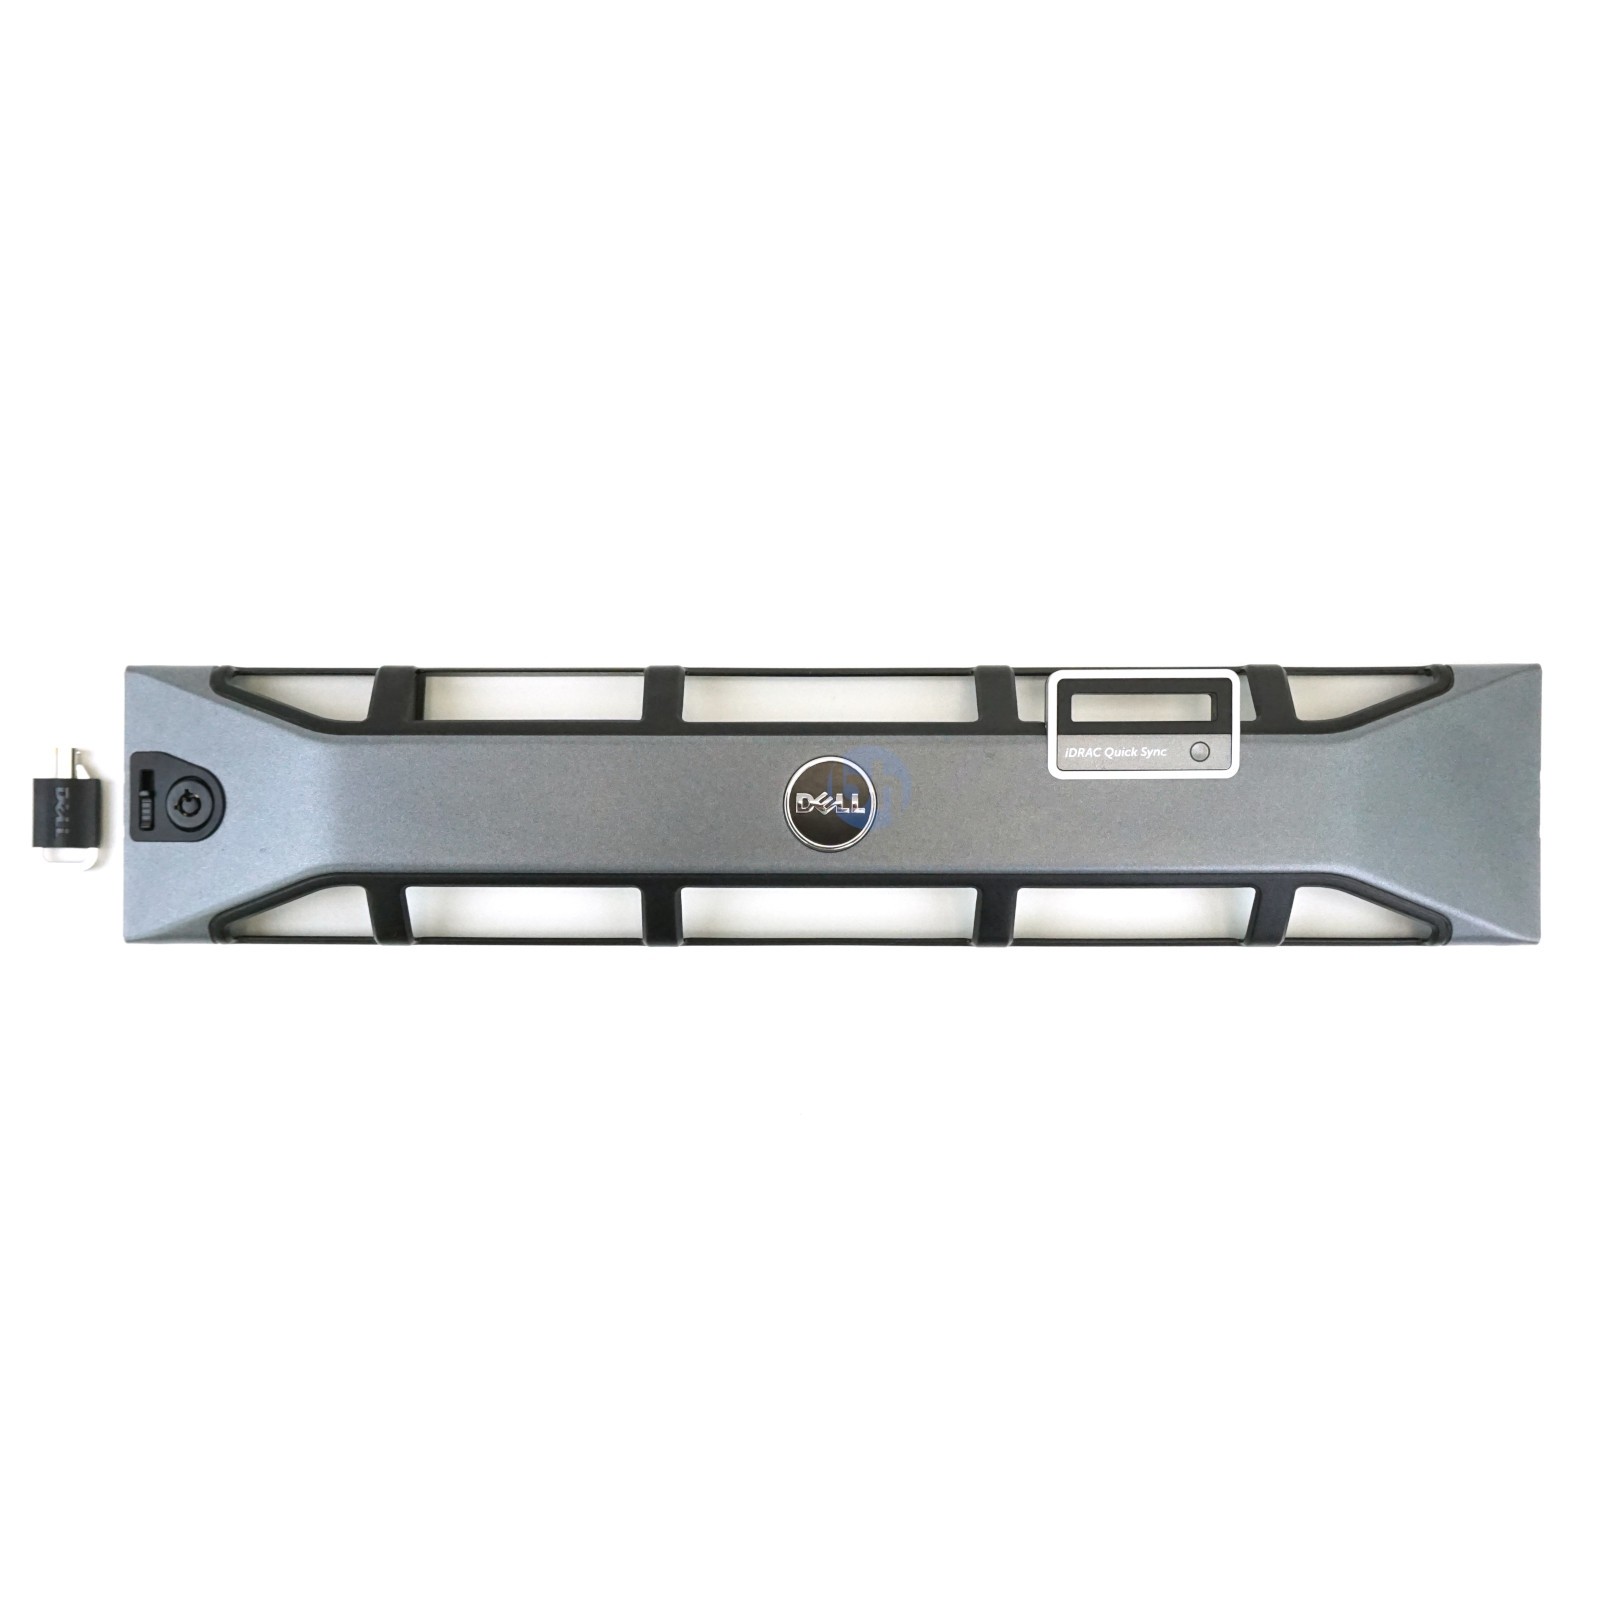 Dell PowerEdge R730 Quick Sync iDrac Front Bezel With Key